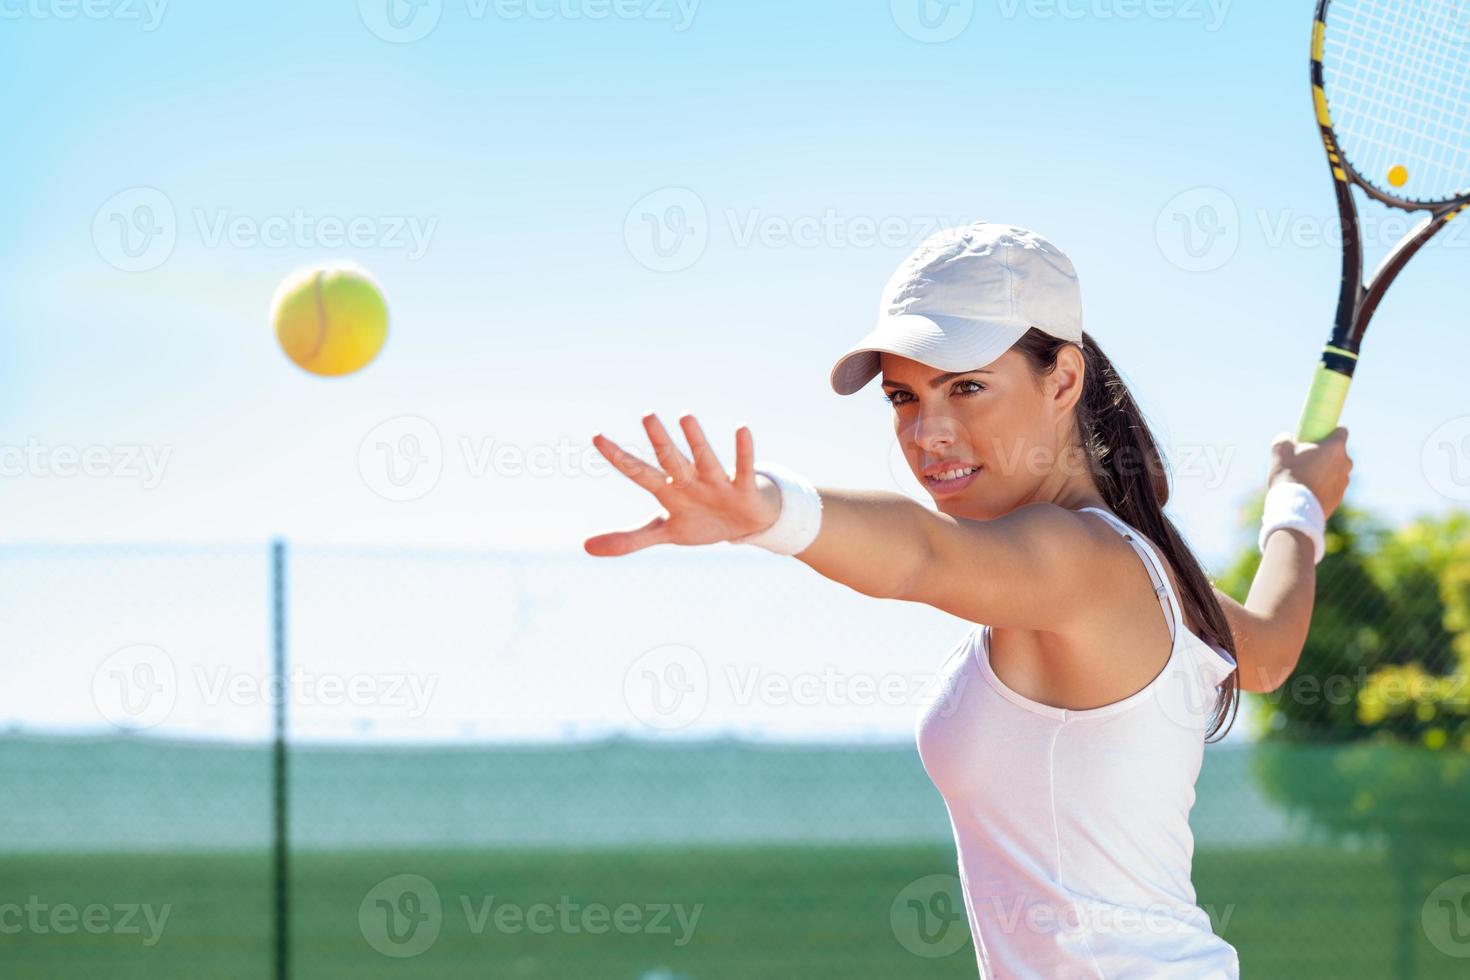 Tennis photo